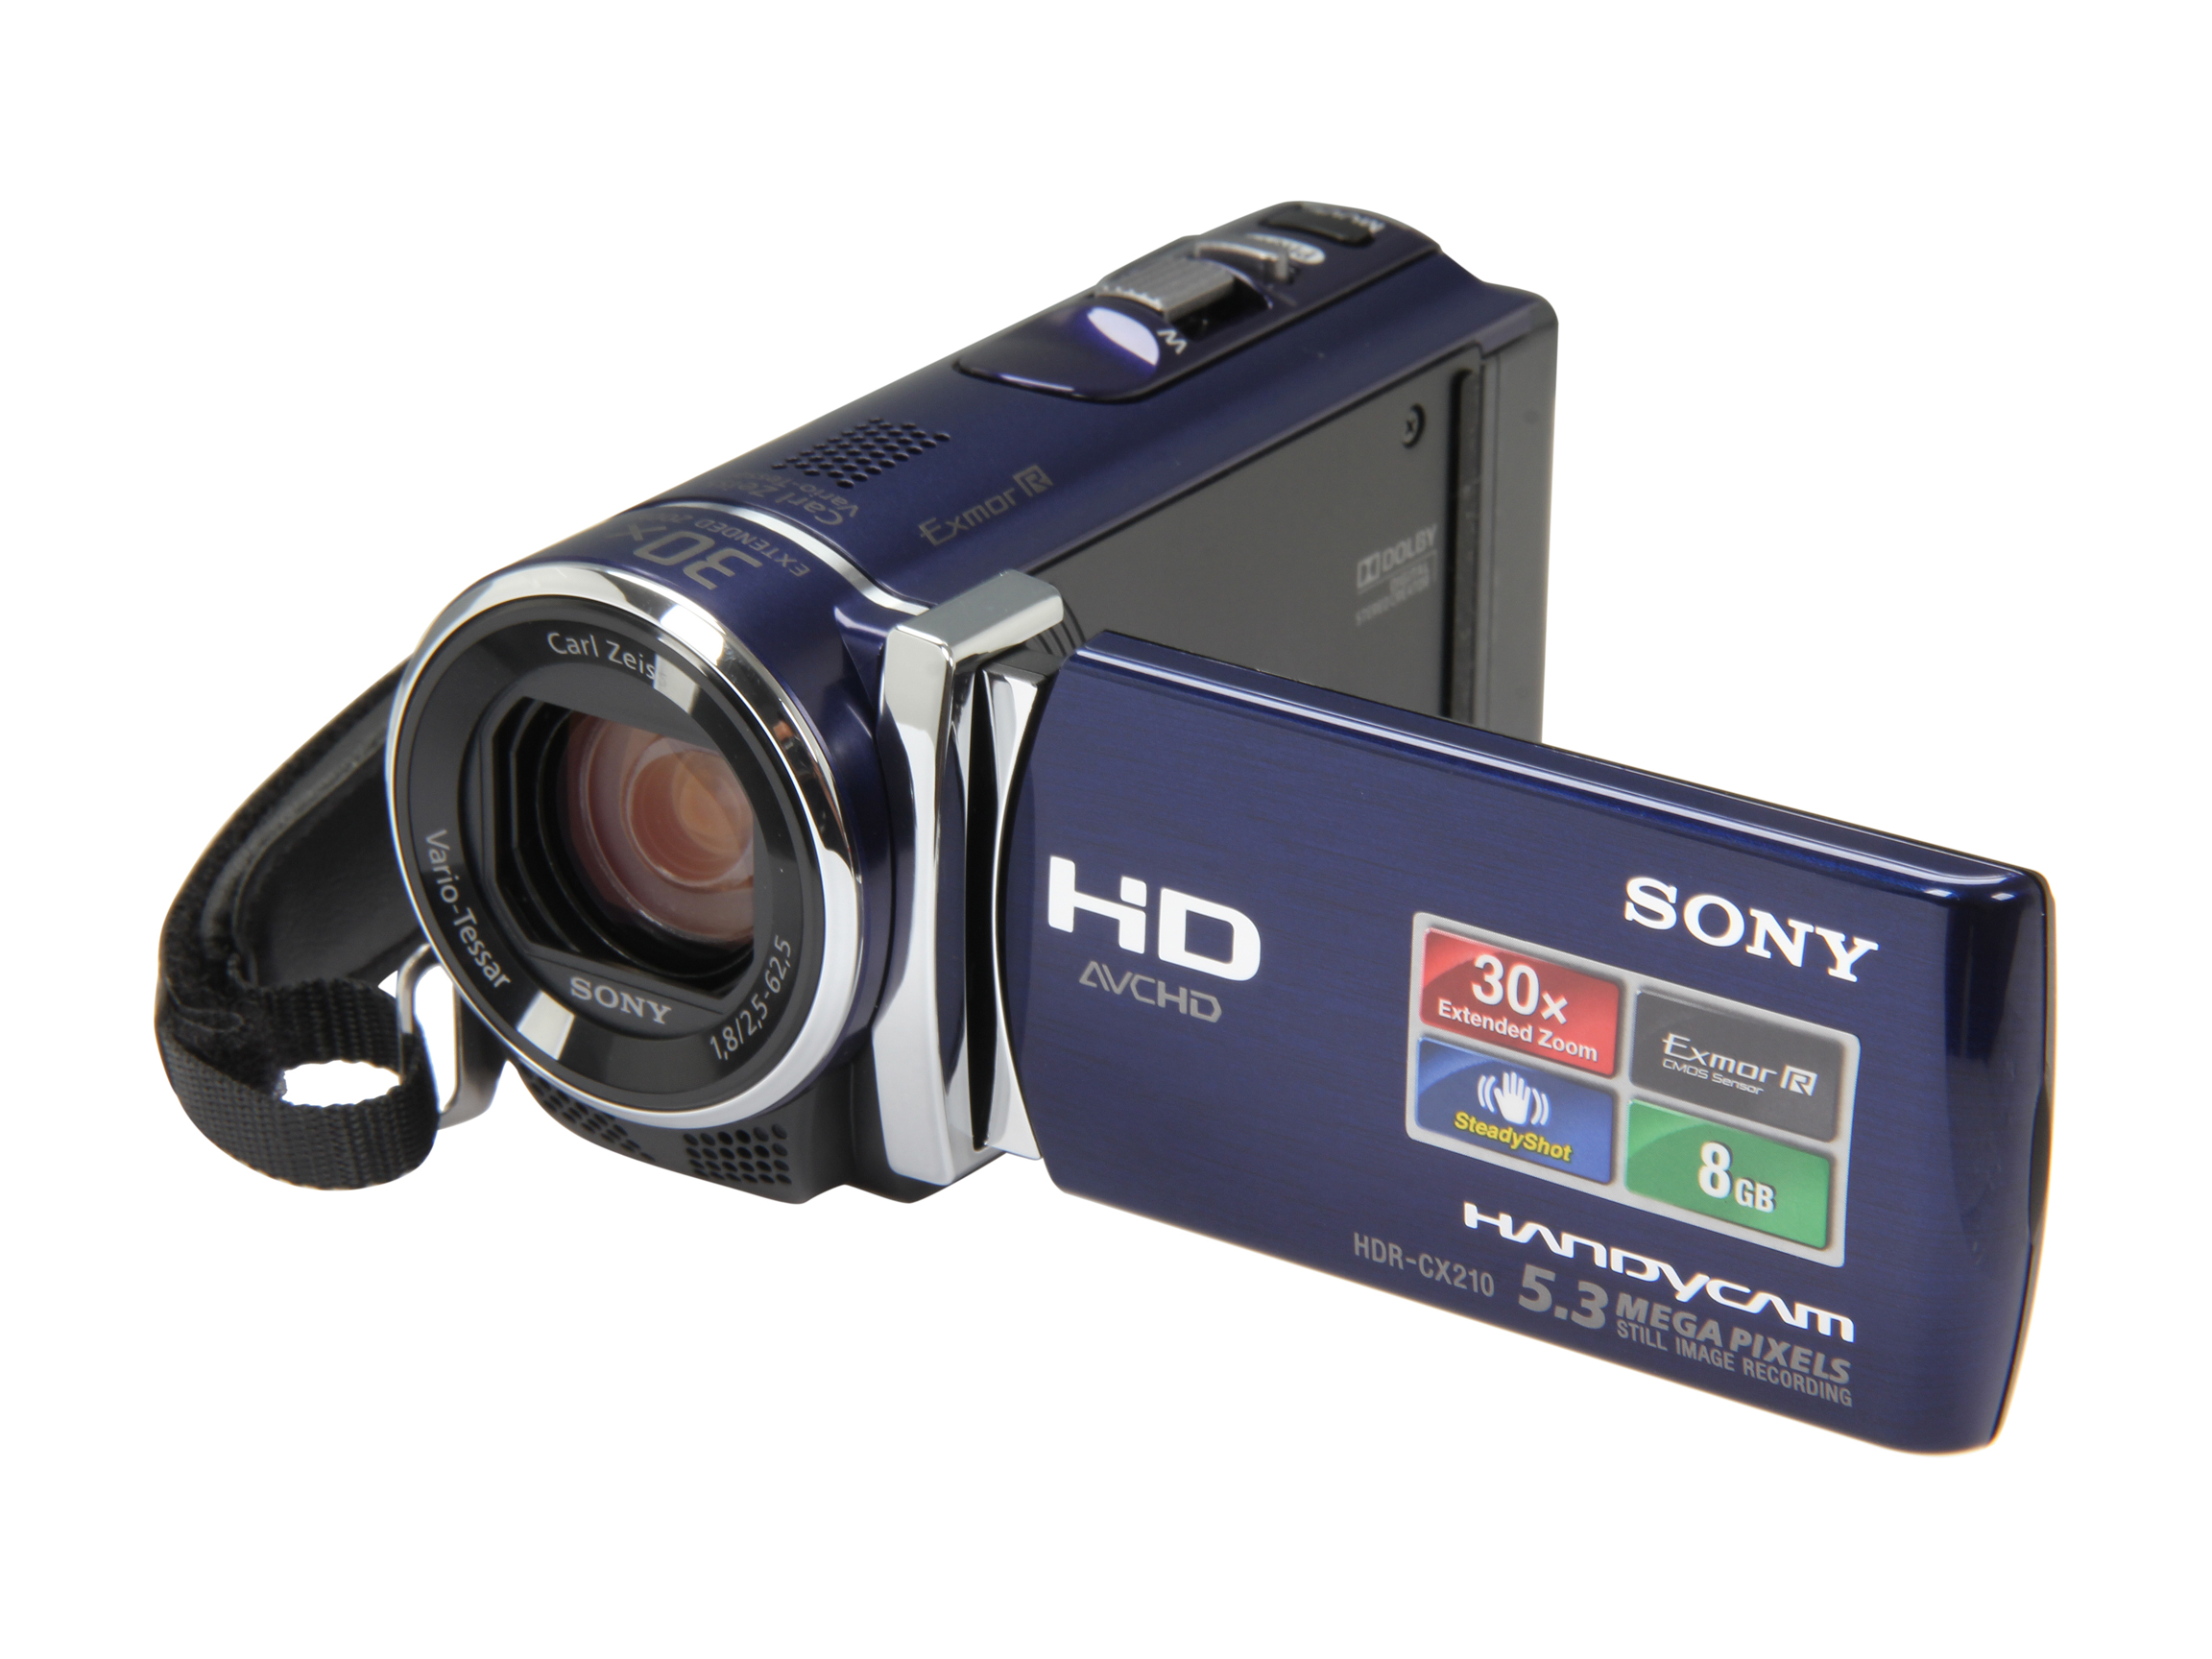 Sony HDR CX210 1920x1080 Full HD Camcorder   5.3 MegaPixels, 1/5.8" CMOS, 2.7" Touch Screen LCD, 300x Digital, 25x Optical, 8GB Internal, SD Card Slot, HDMI, USB, Blue